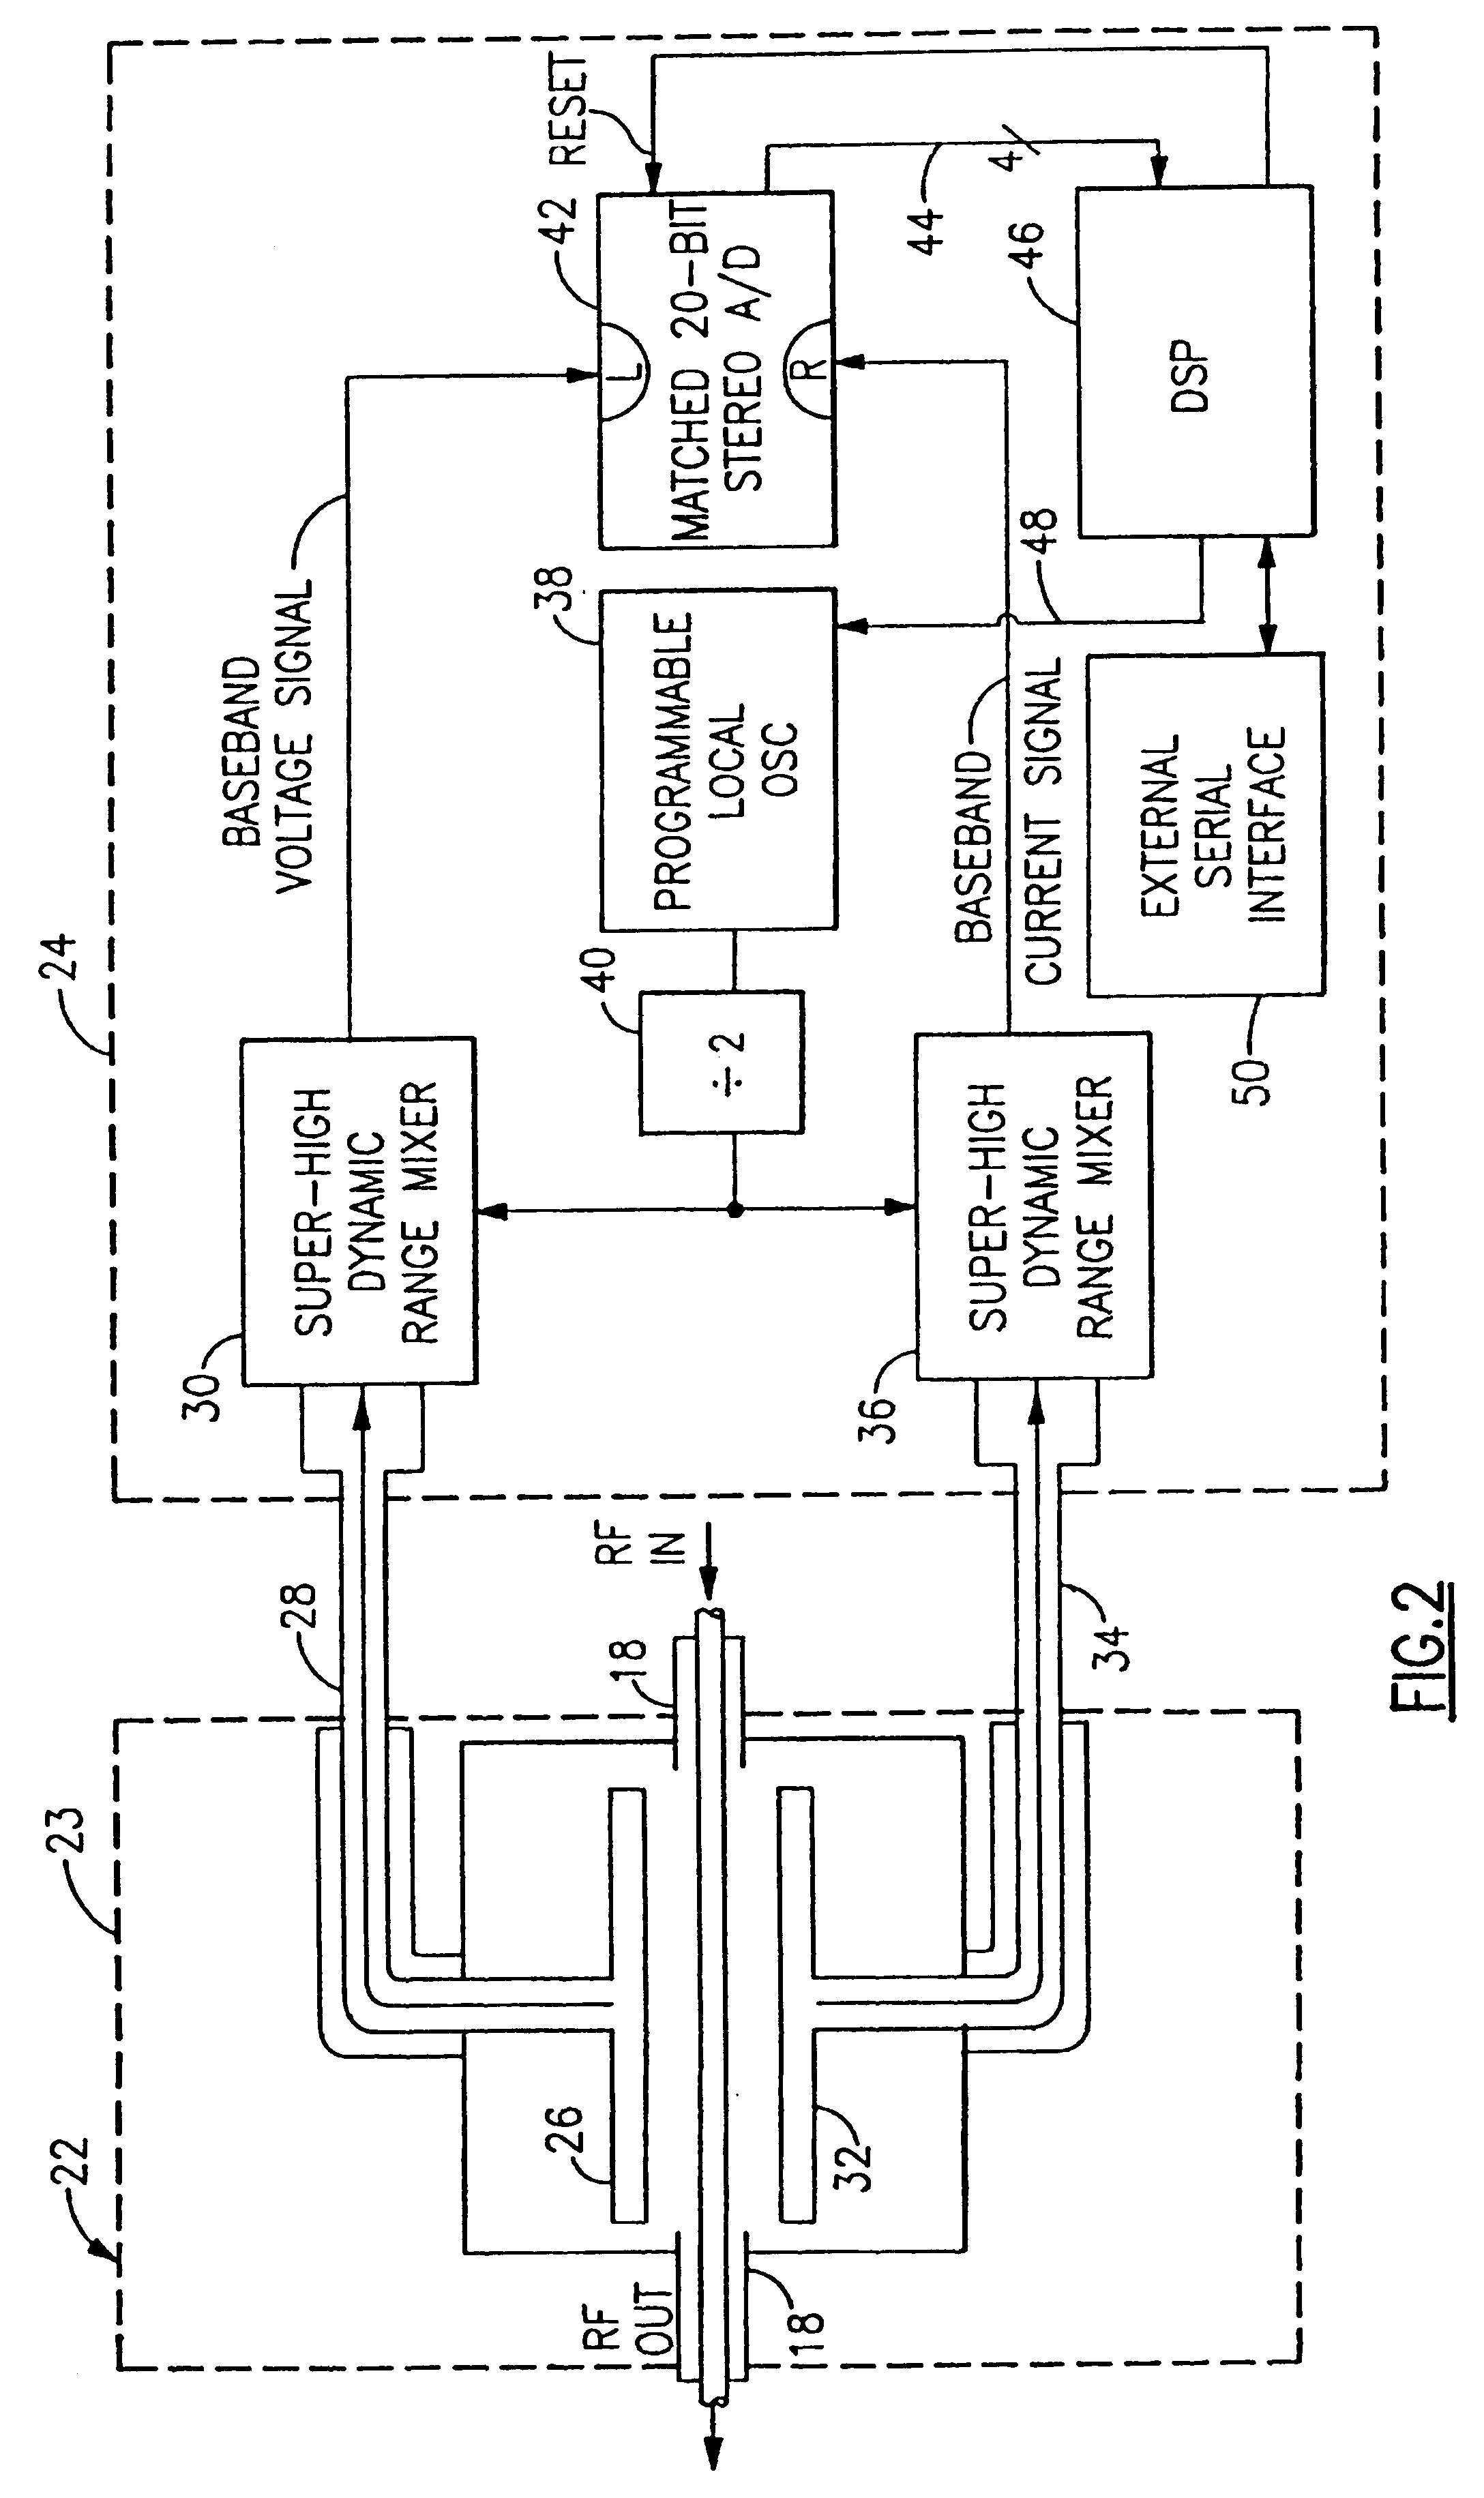 Baseband RF voltage-current probe